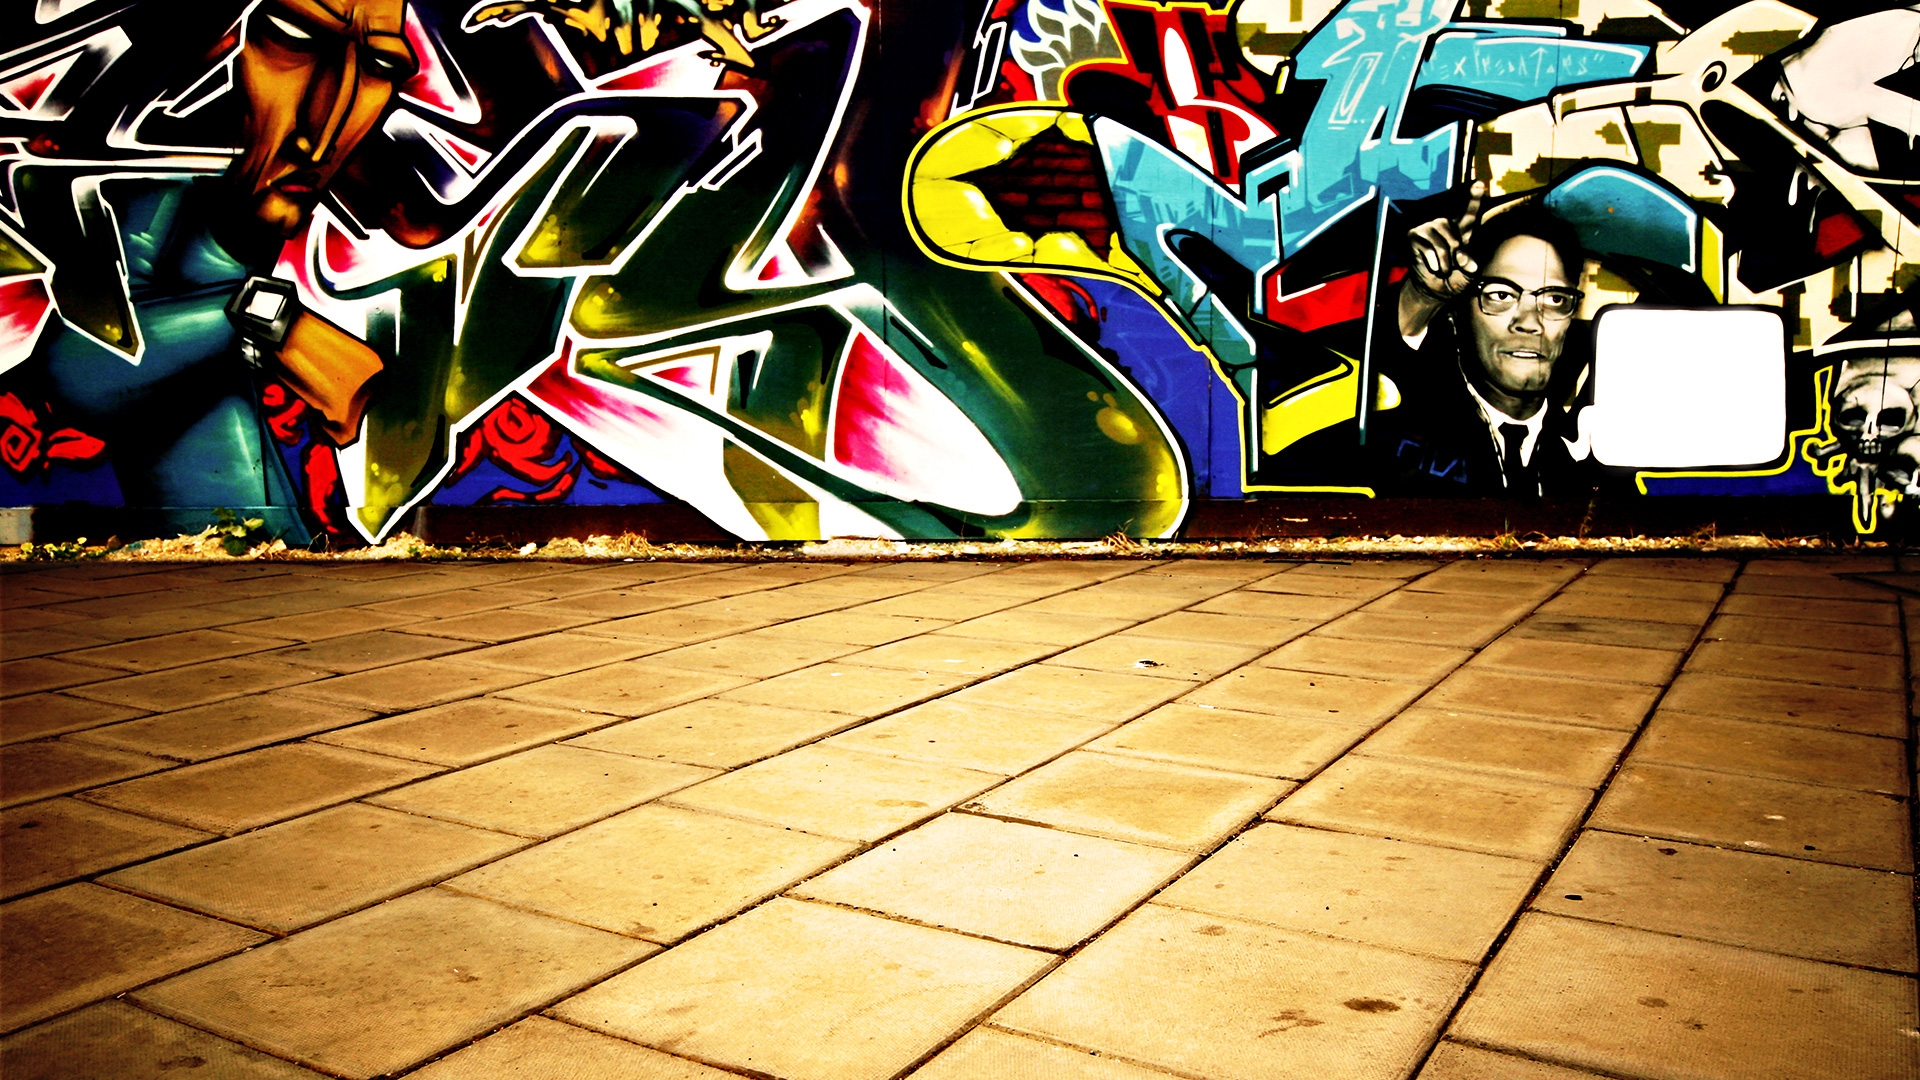 49+ HD Graffiti Wallpapers 1080p on WallpaperSafari